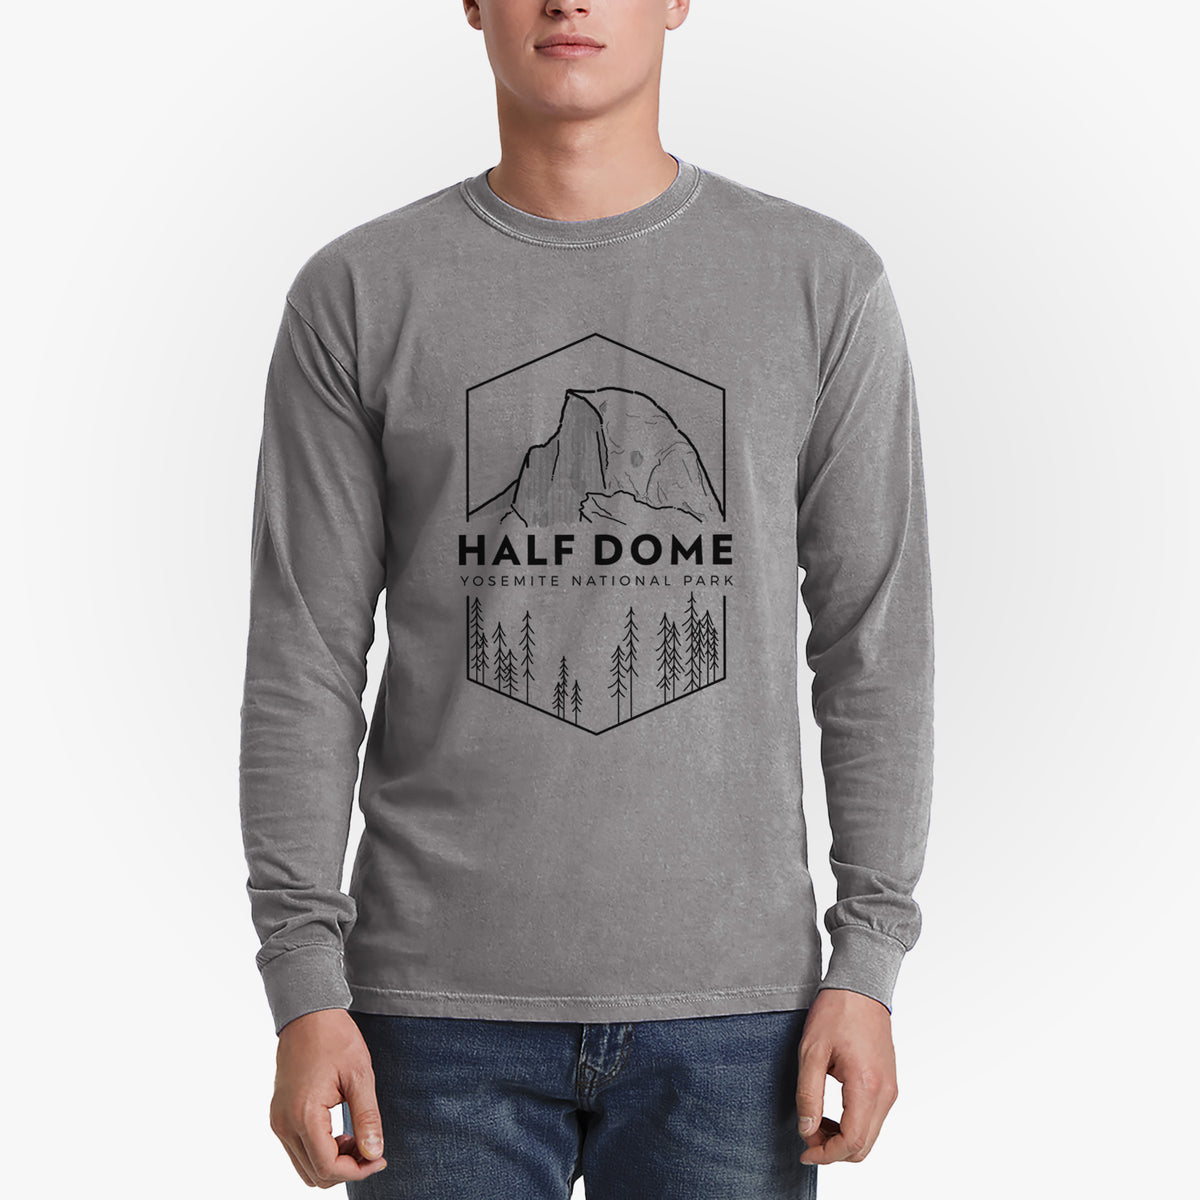 Half Dome - Yosemite National Park - Heavyweight 100% Cotton Long Sleeve